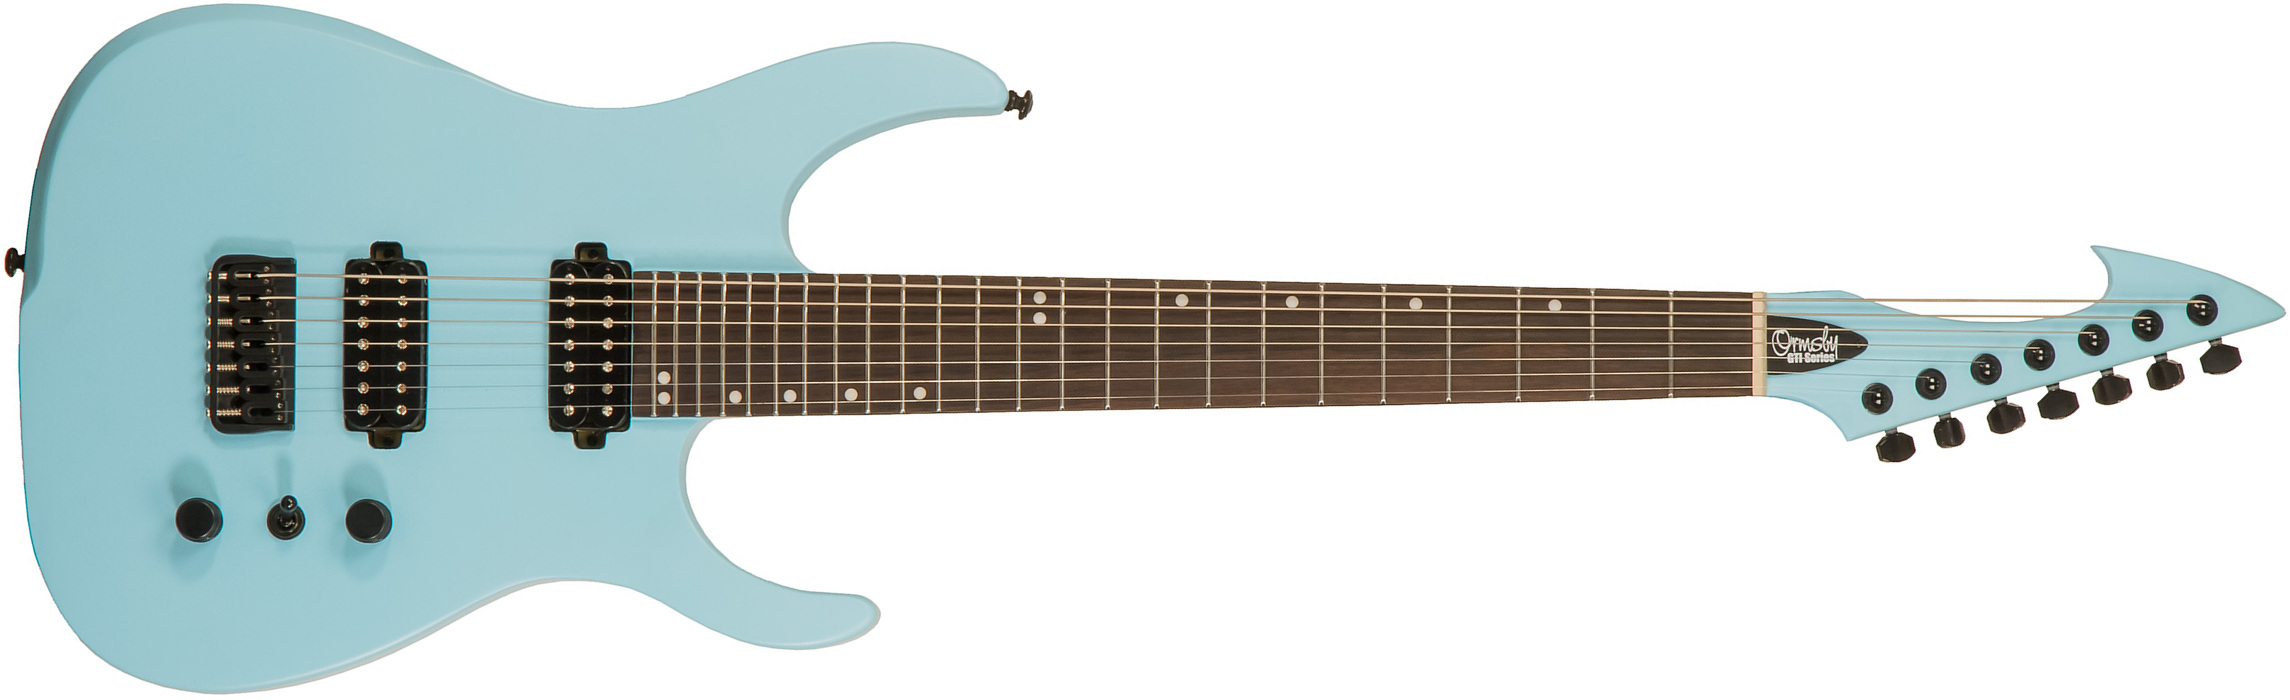 Ormsby Hype Gti-s 7 Standard Scale Hh Ht Eb - Opaline Blue - Guitarra eléctrica de 7 cuerdas - Main picture